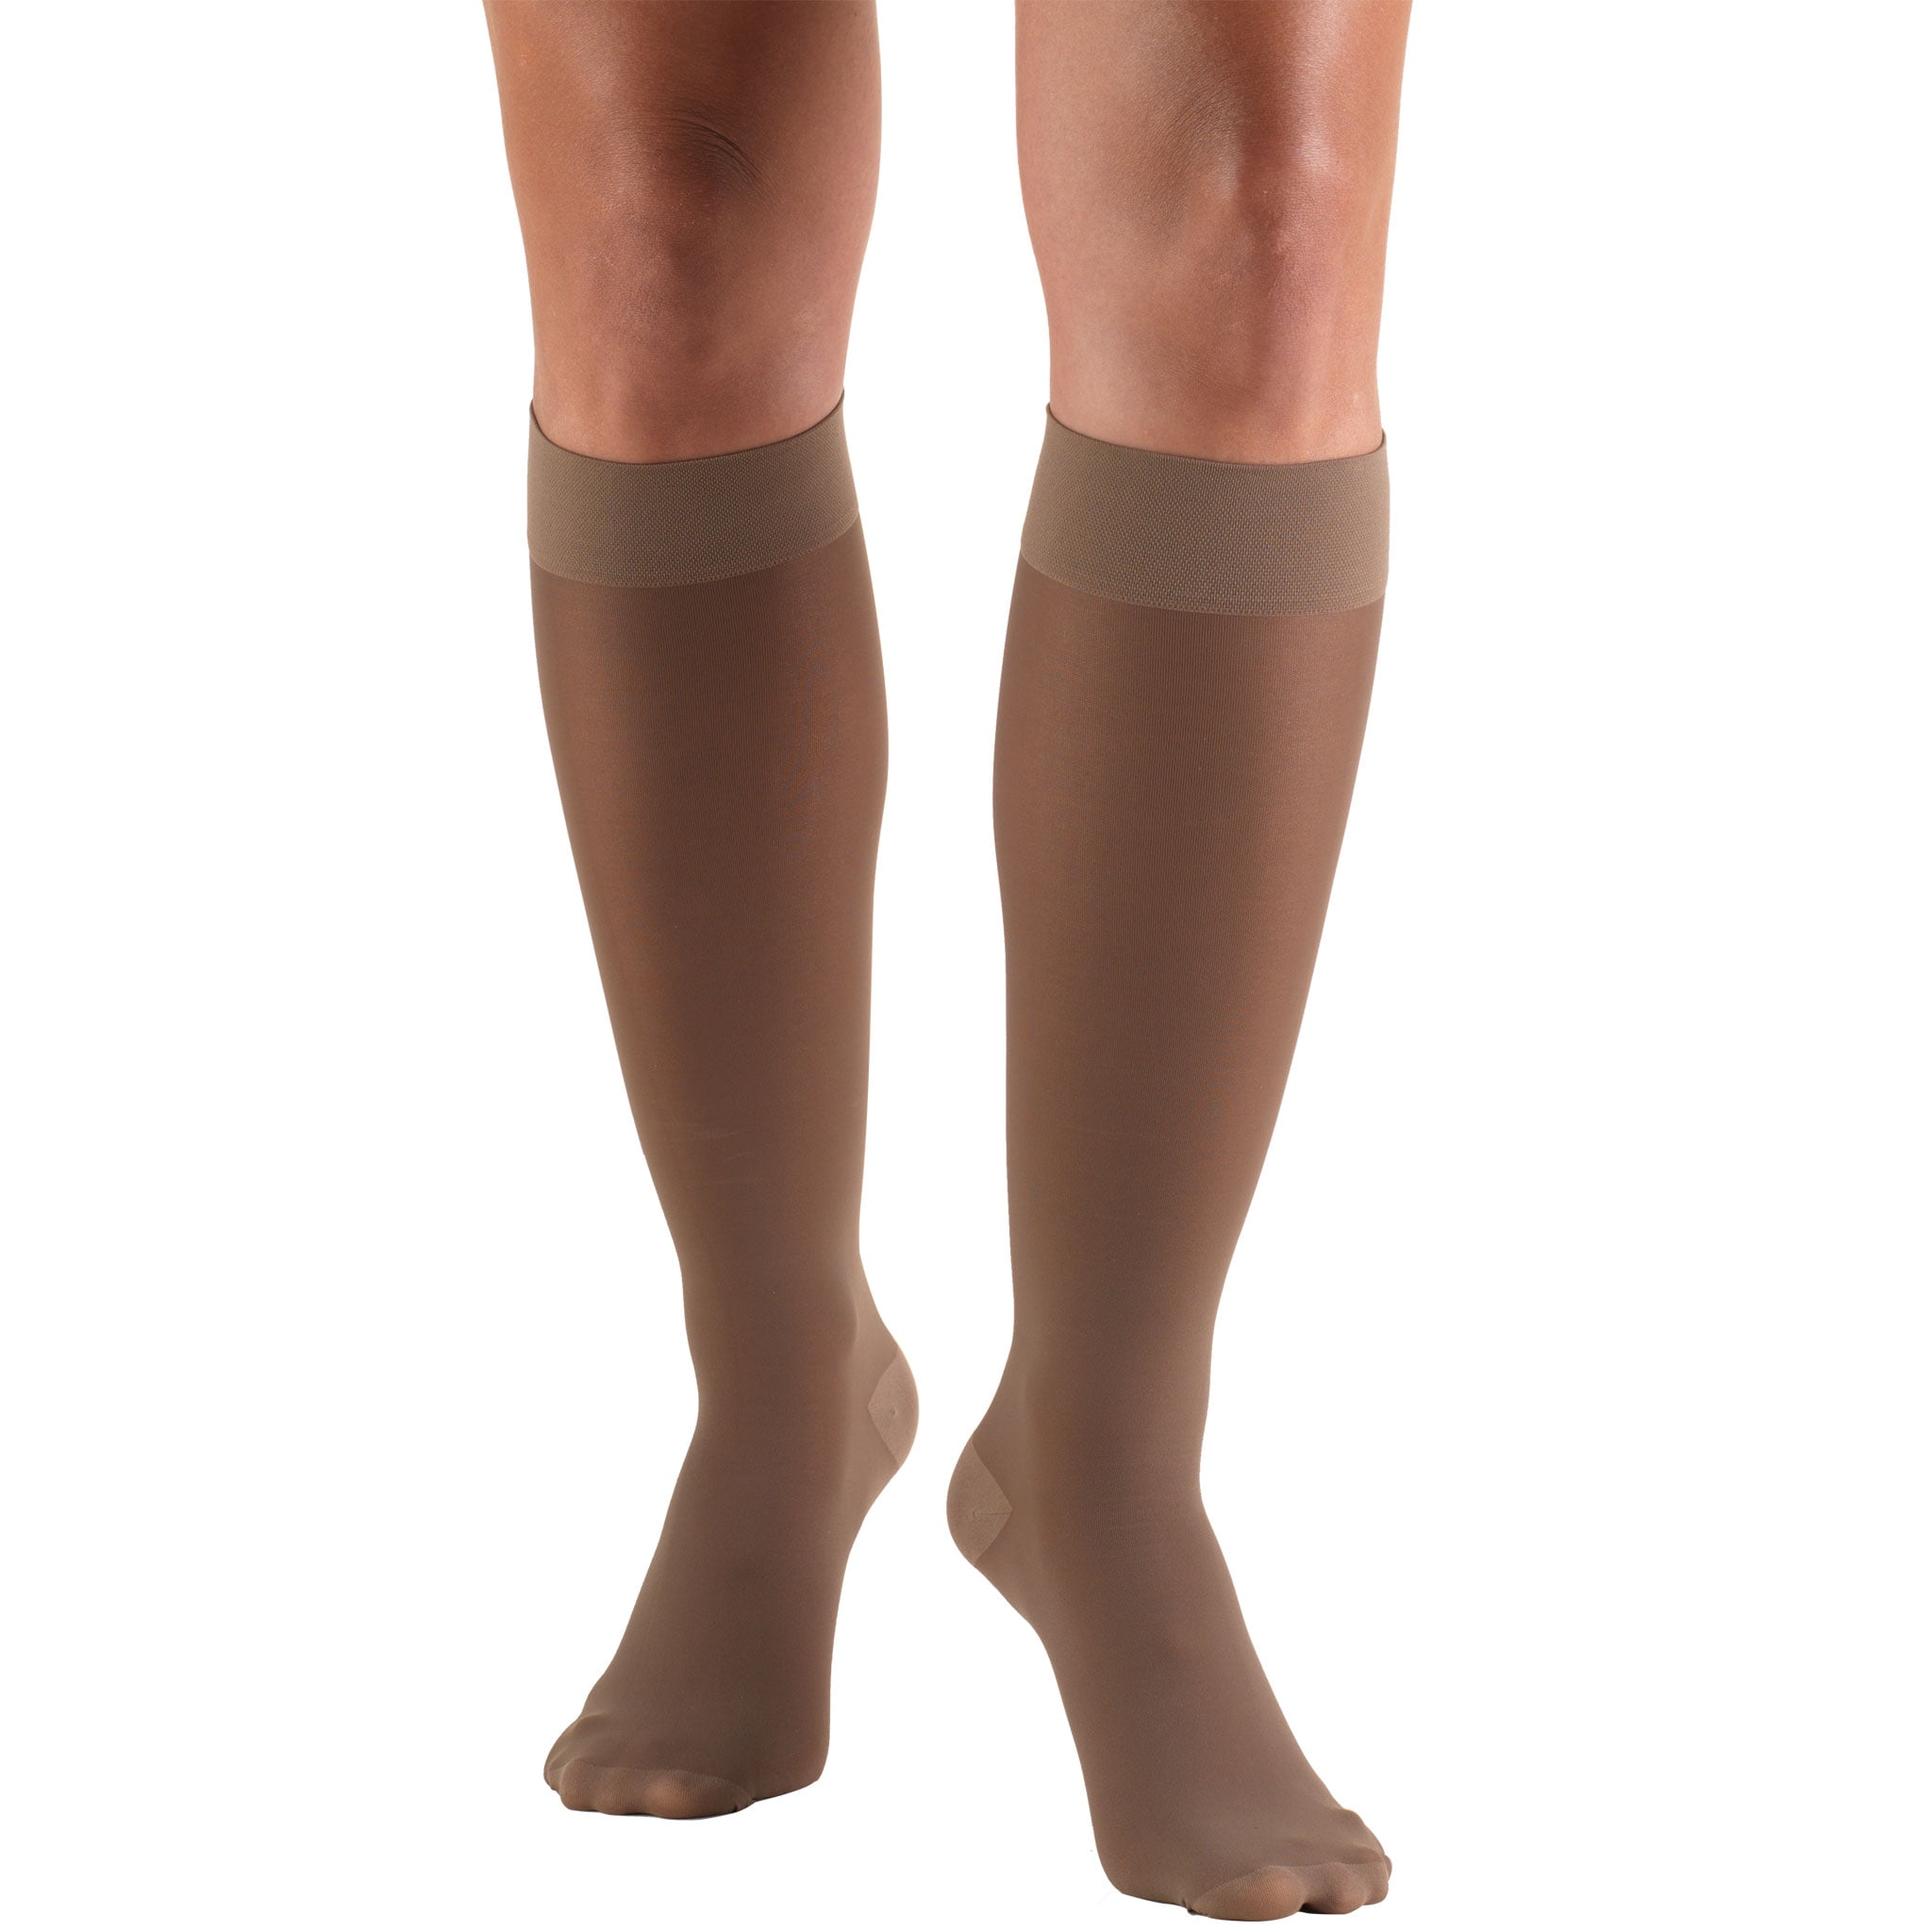 Women's Stockings, Knee High, Sheer: 30-40 mmHg, Taupe, X-Large 